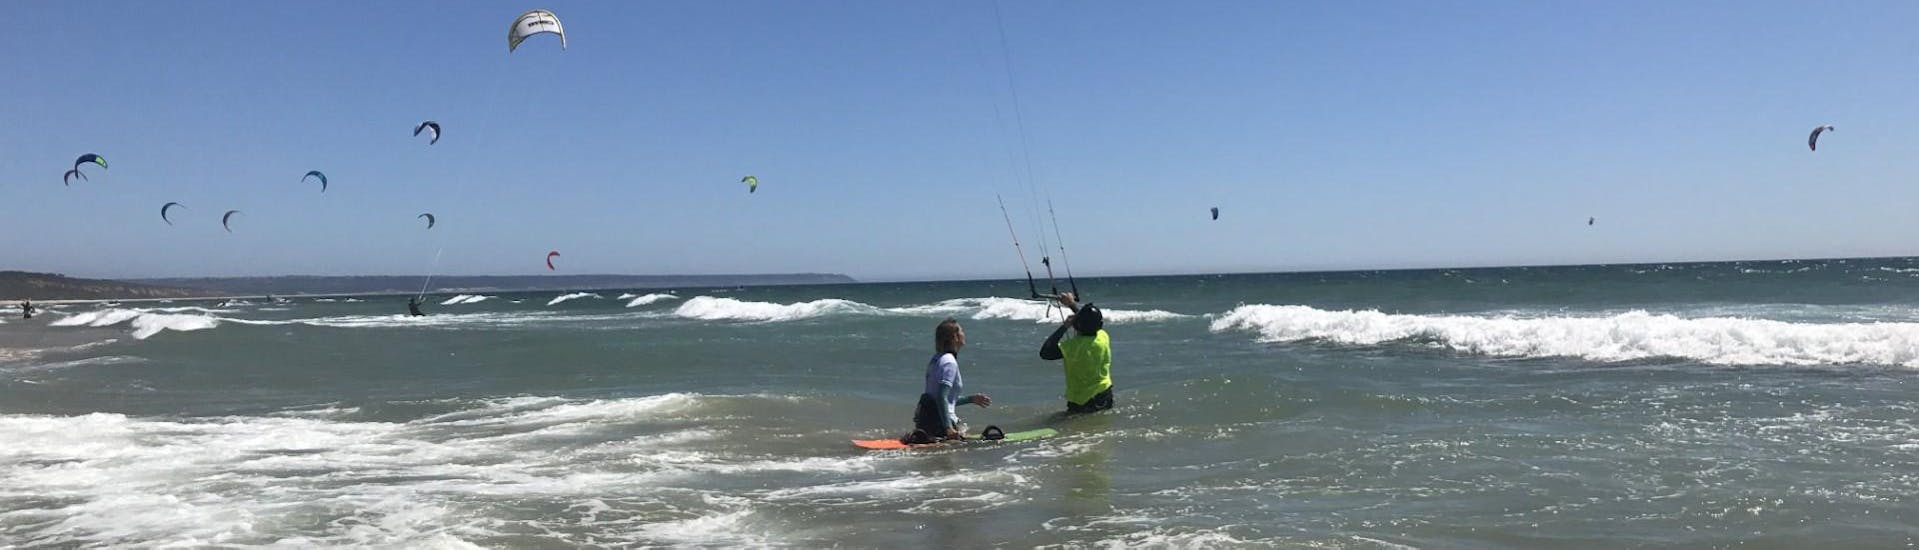 Private Kitesurfing Lessons in Costa da Caparica.